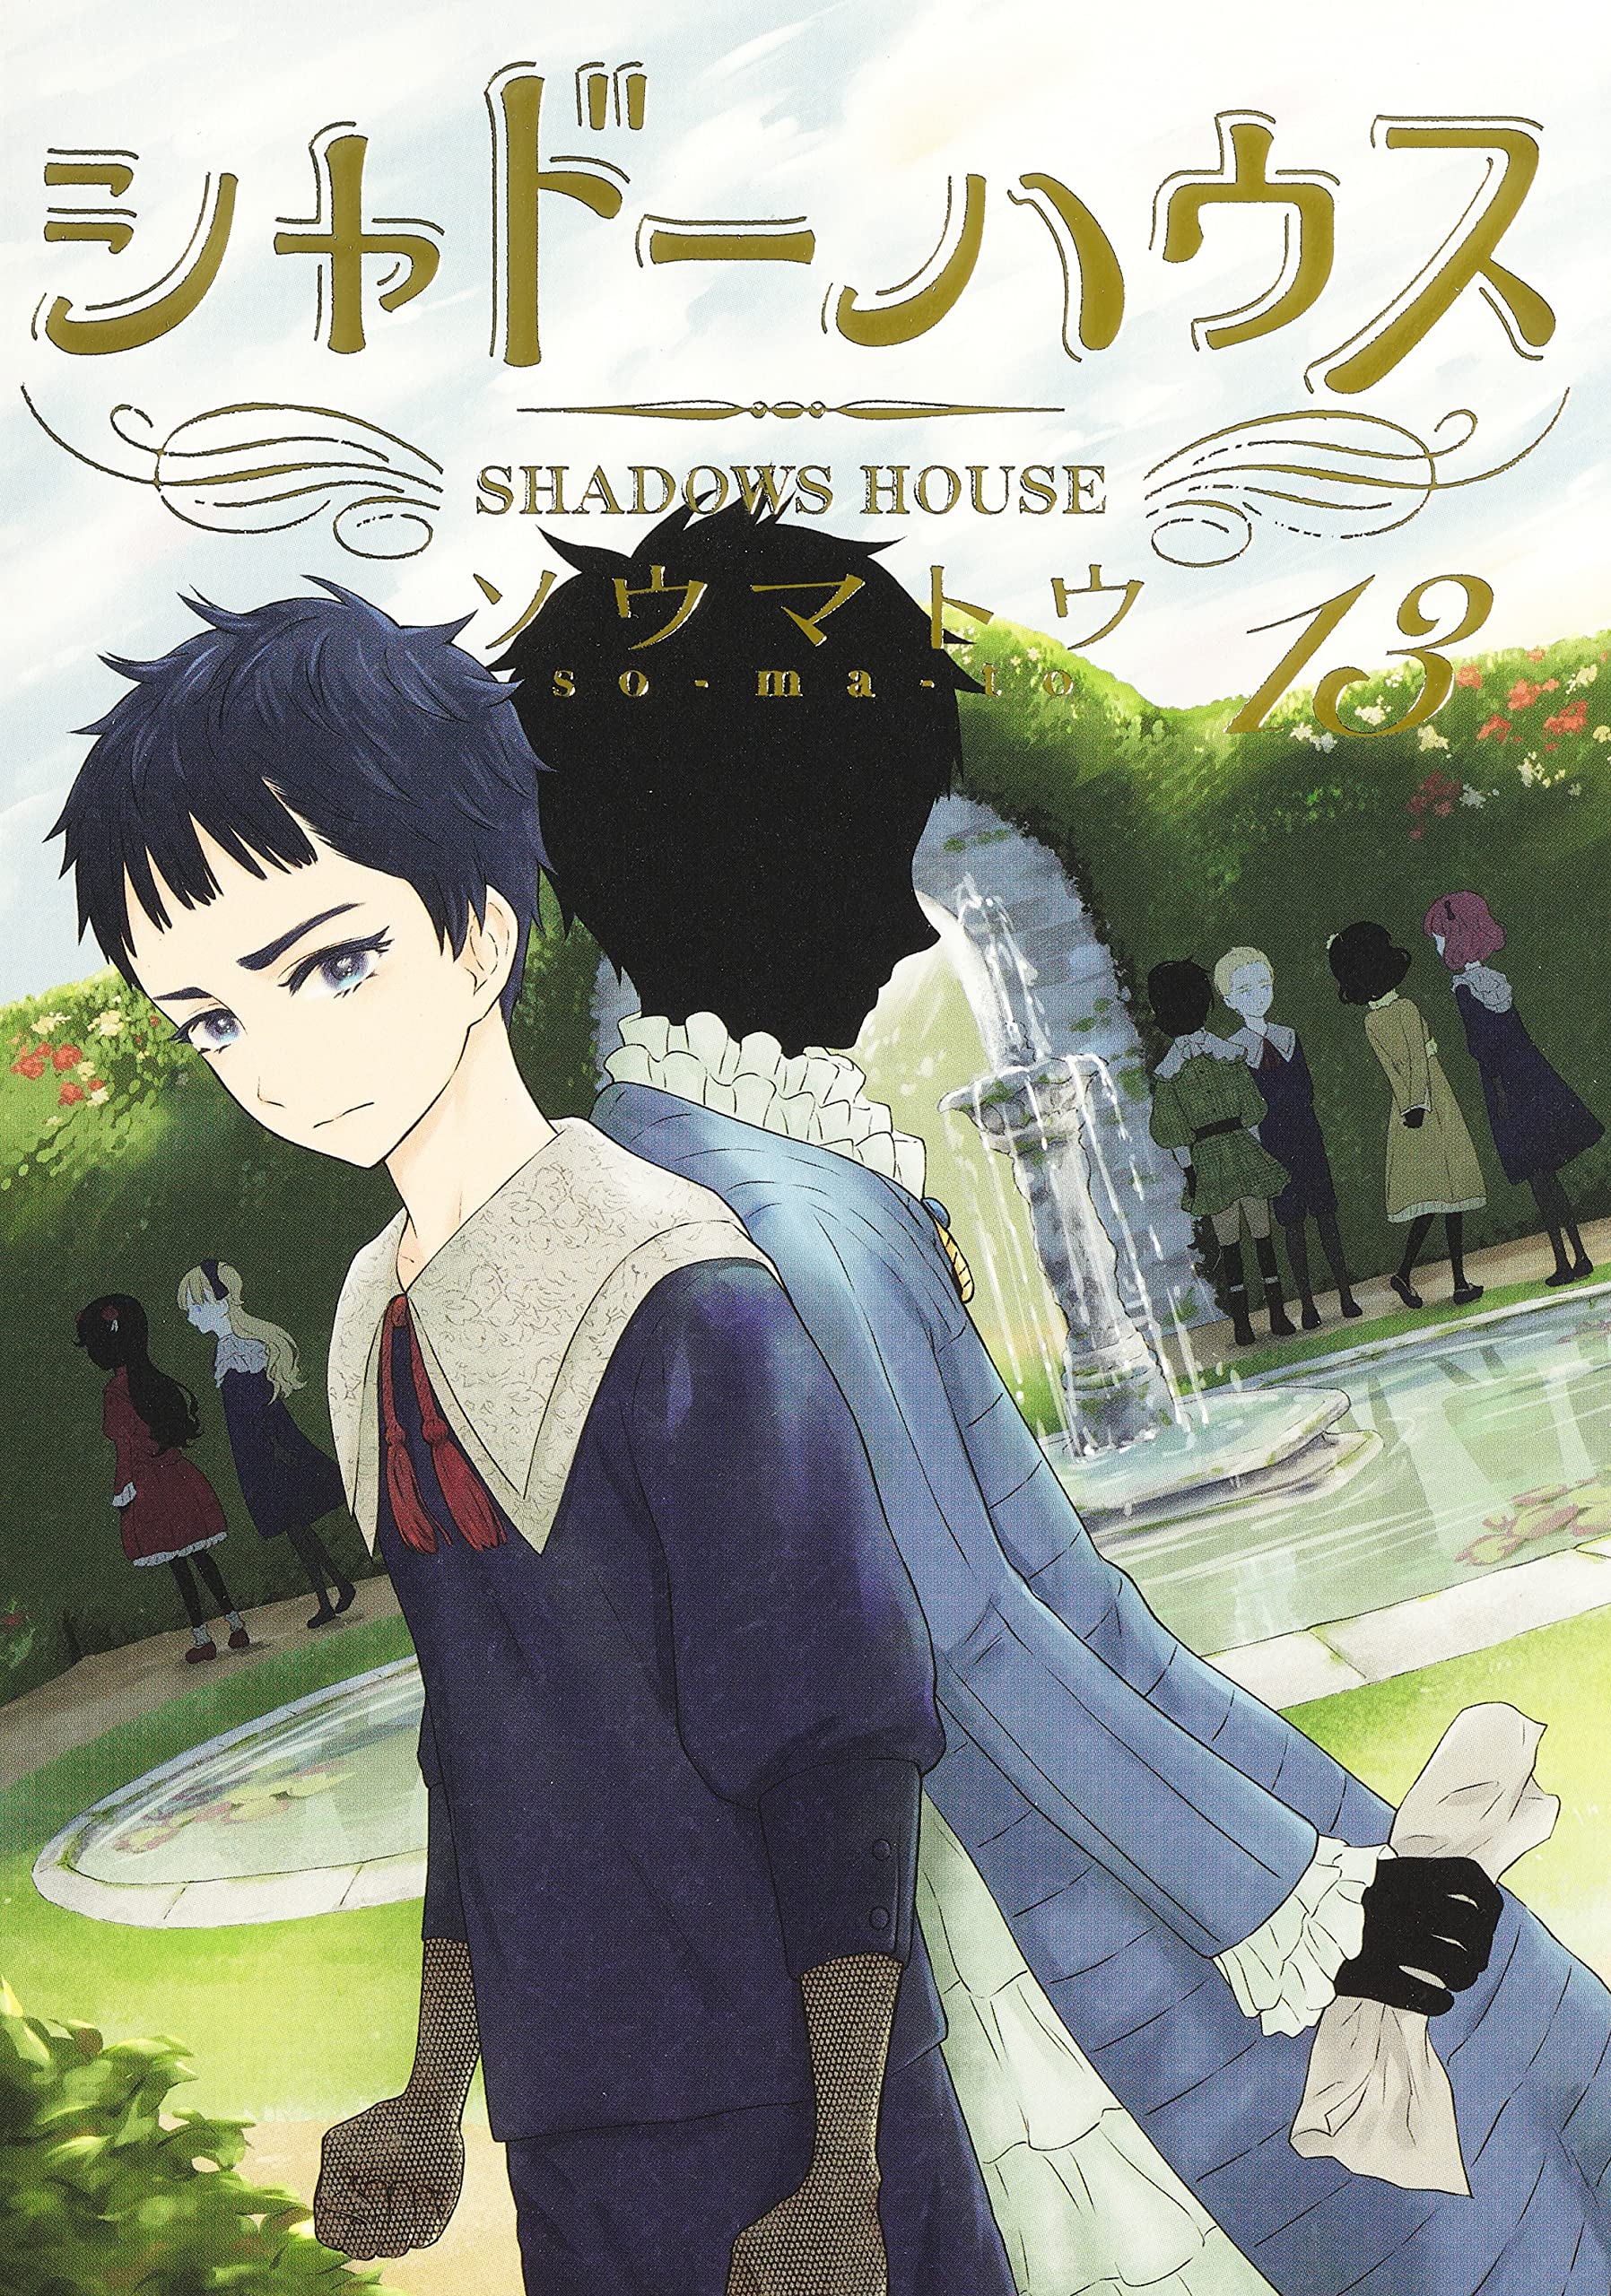 Shadows House, Vol. 1 (Shadows House, 1) by Somato